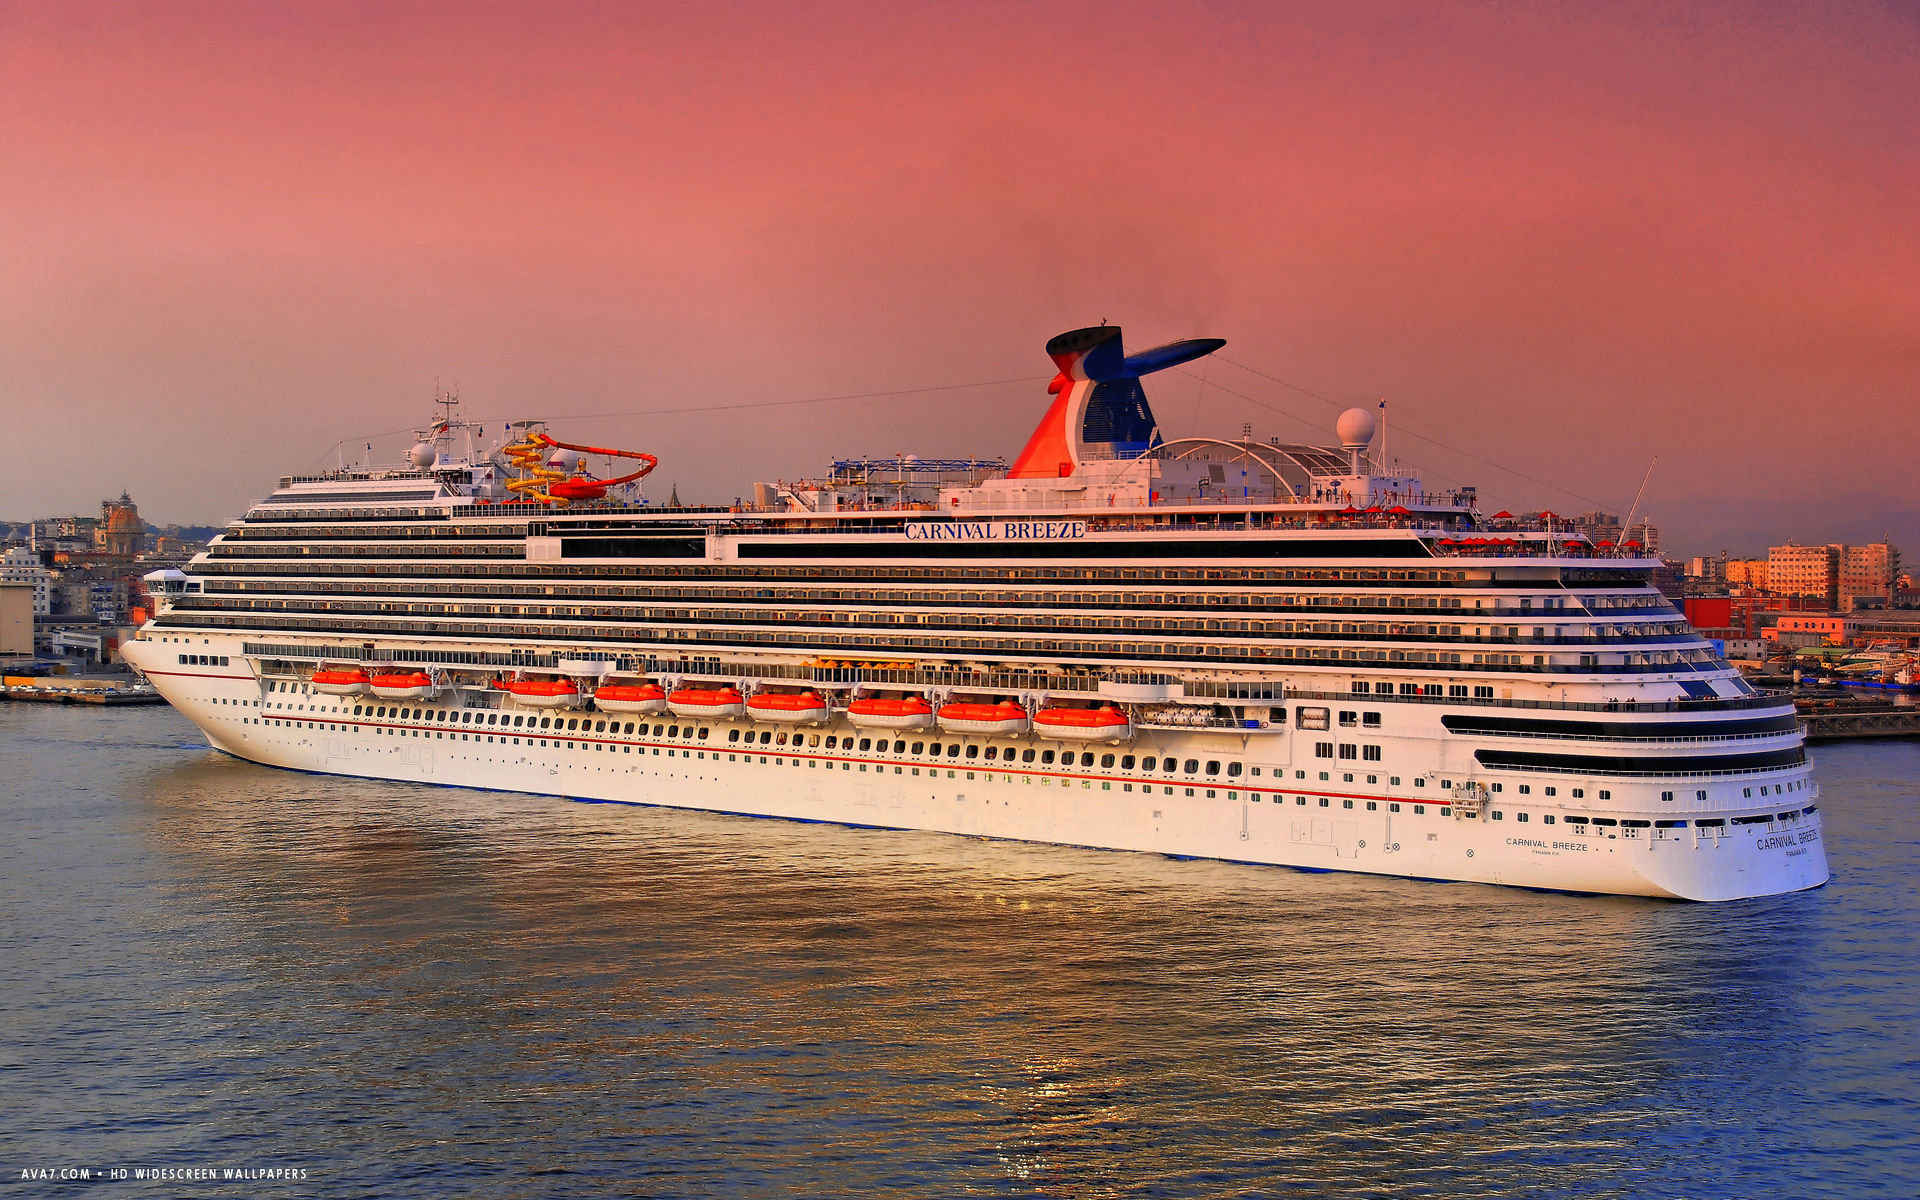 carnival breeze cruise ship hd widescreen wallpaper